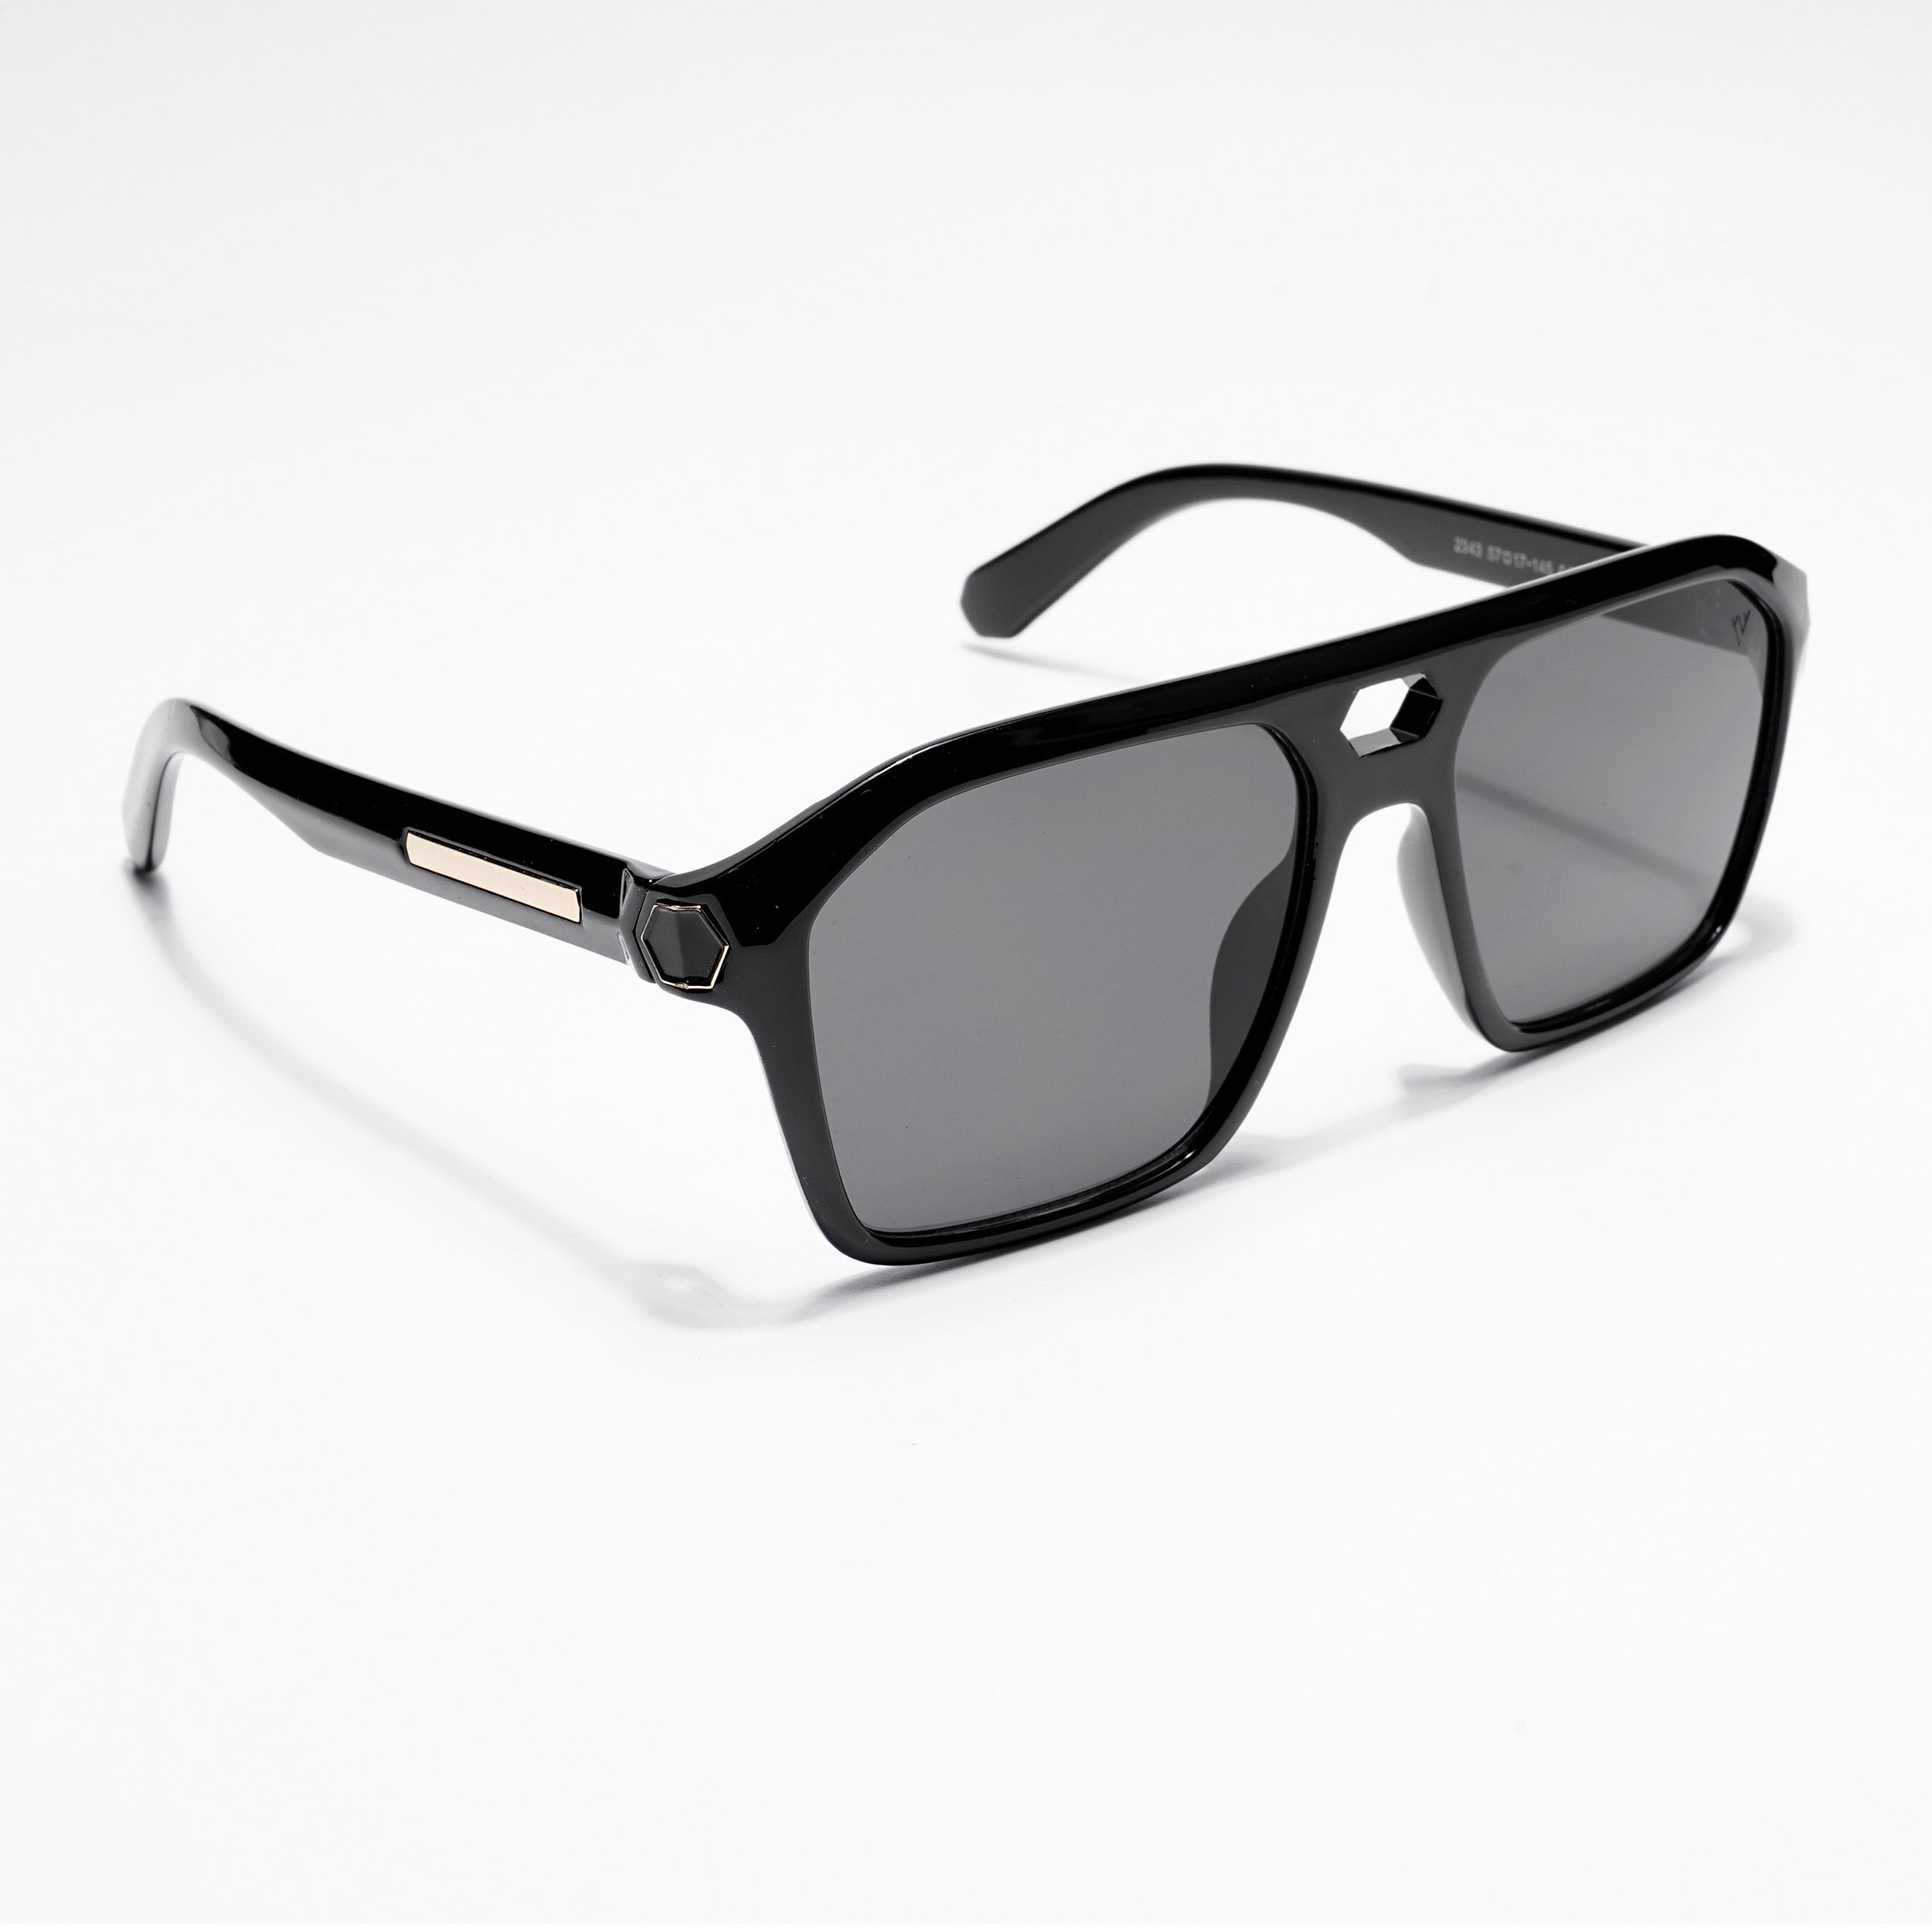 Voyage Black Wayfarer Sunglasses for Men & Women - MG4098